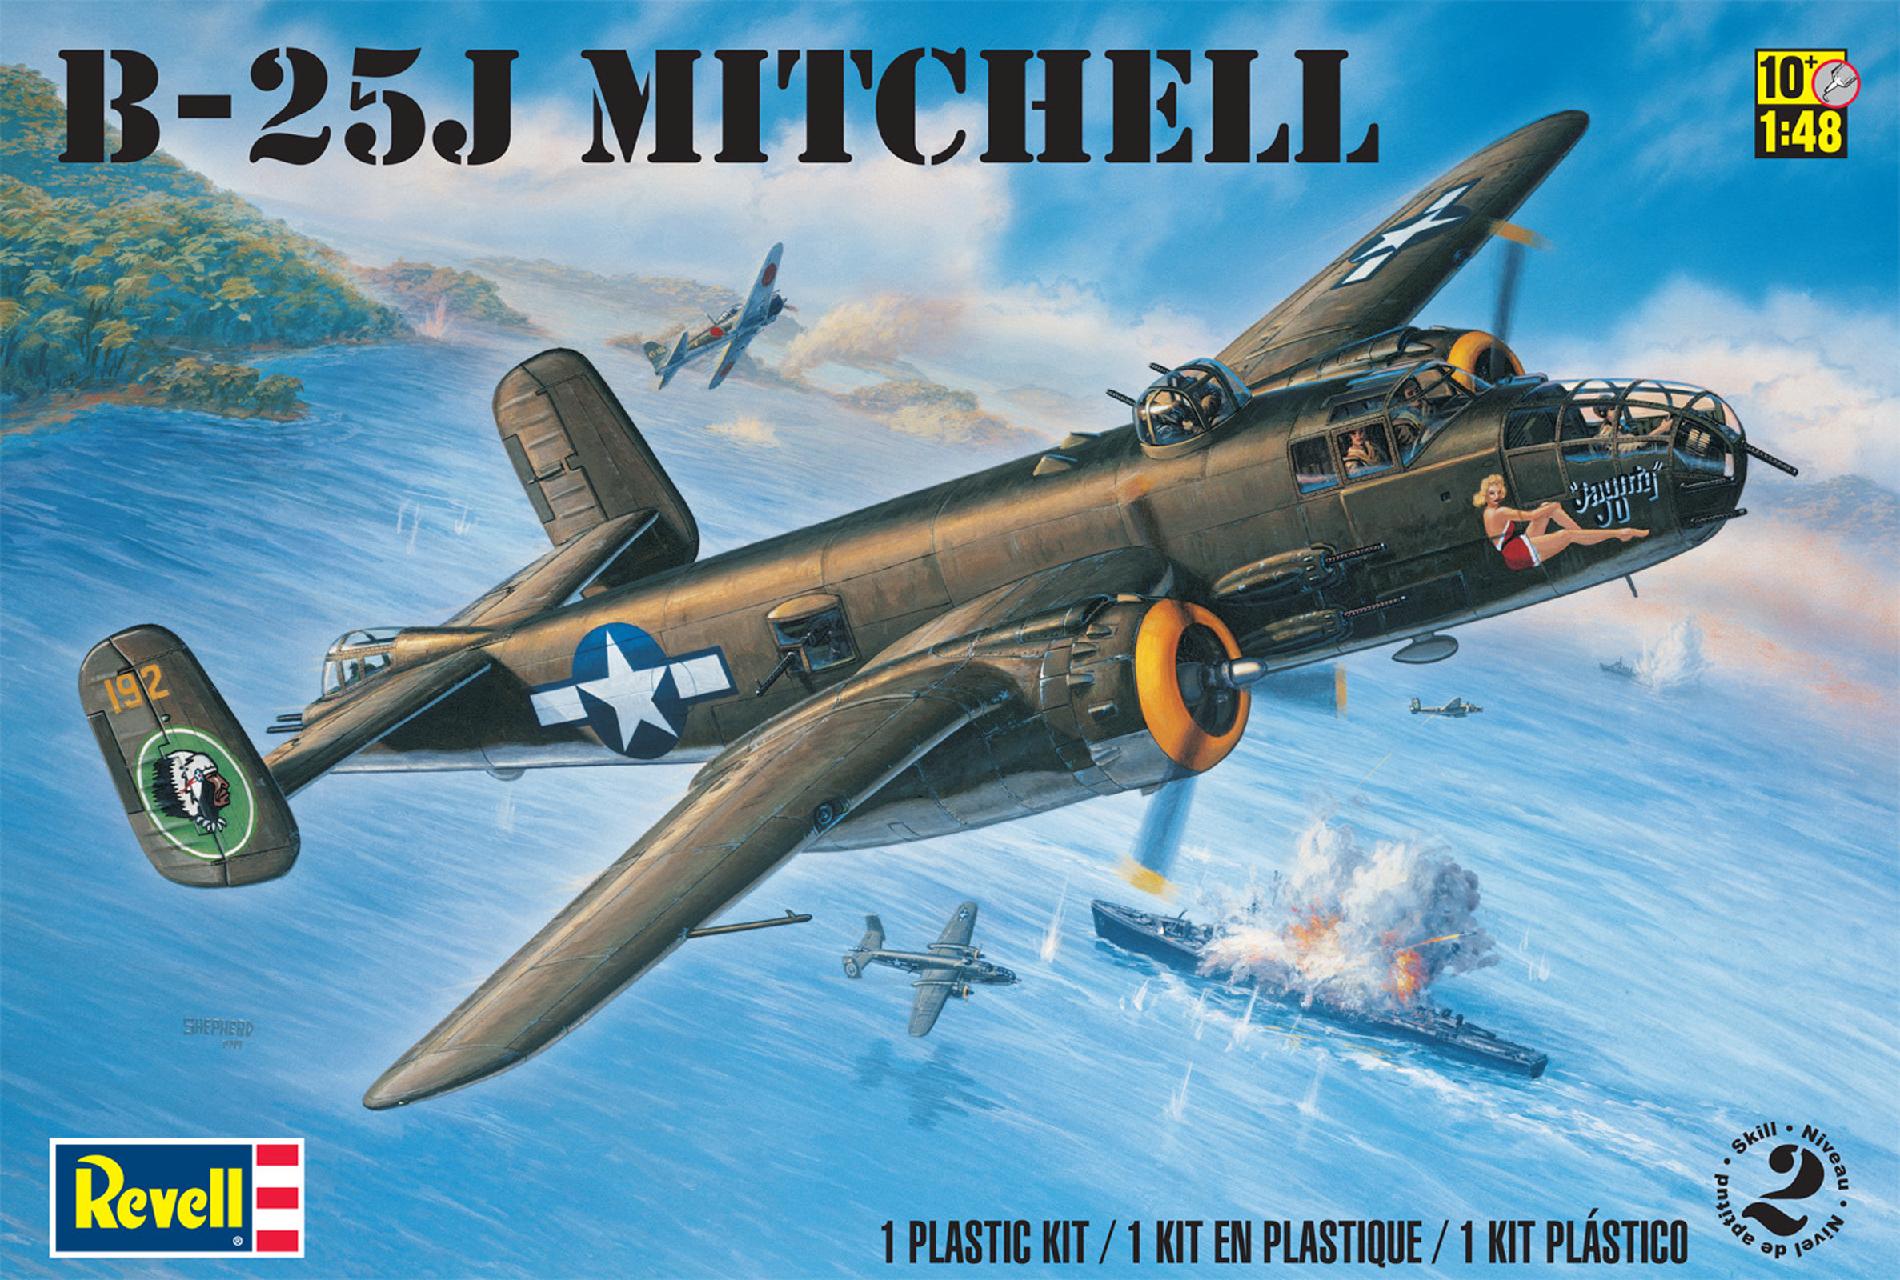 Revell 1:48 Scale B25J Mitchell Model Kit